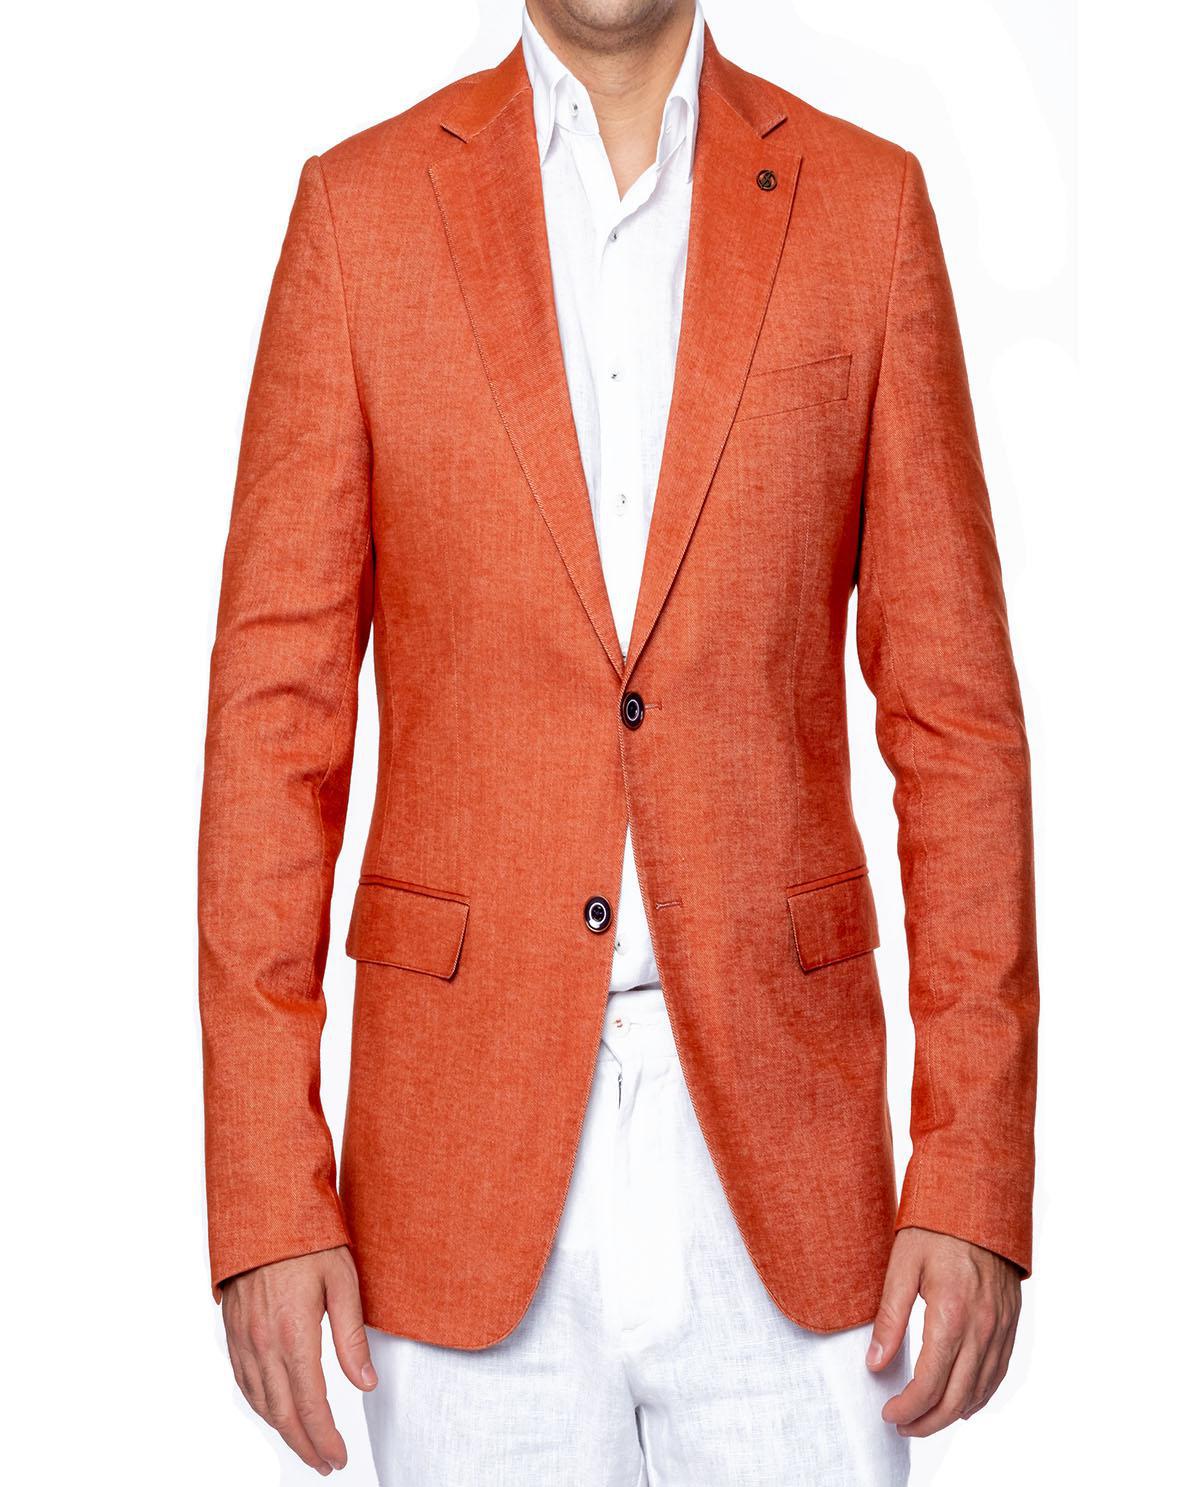 Veste orange en coton